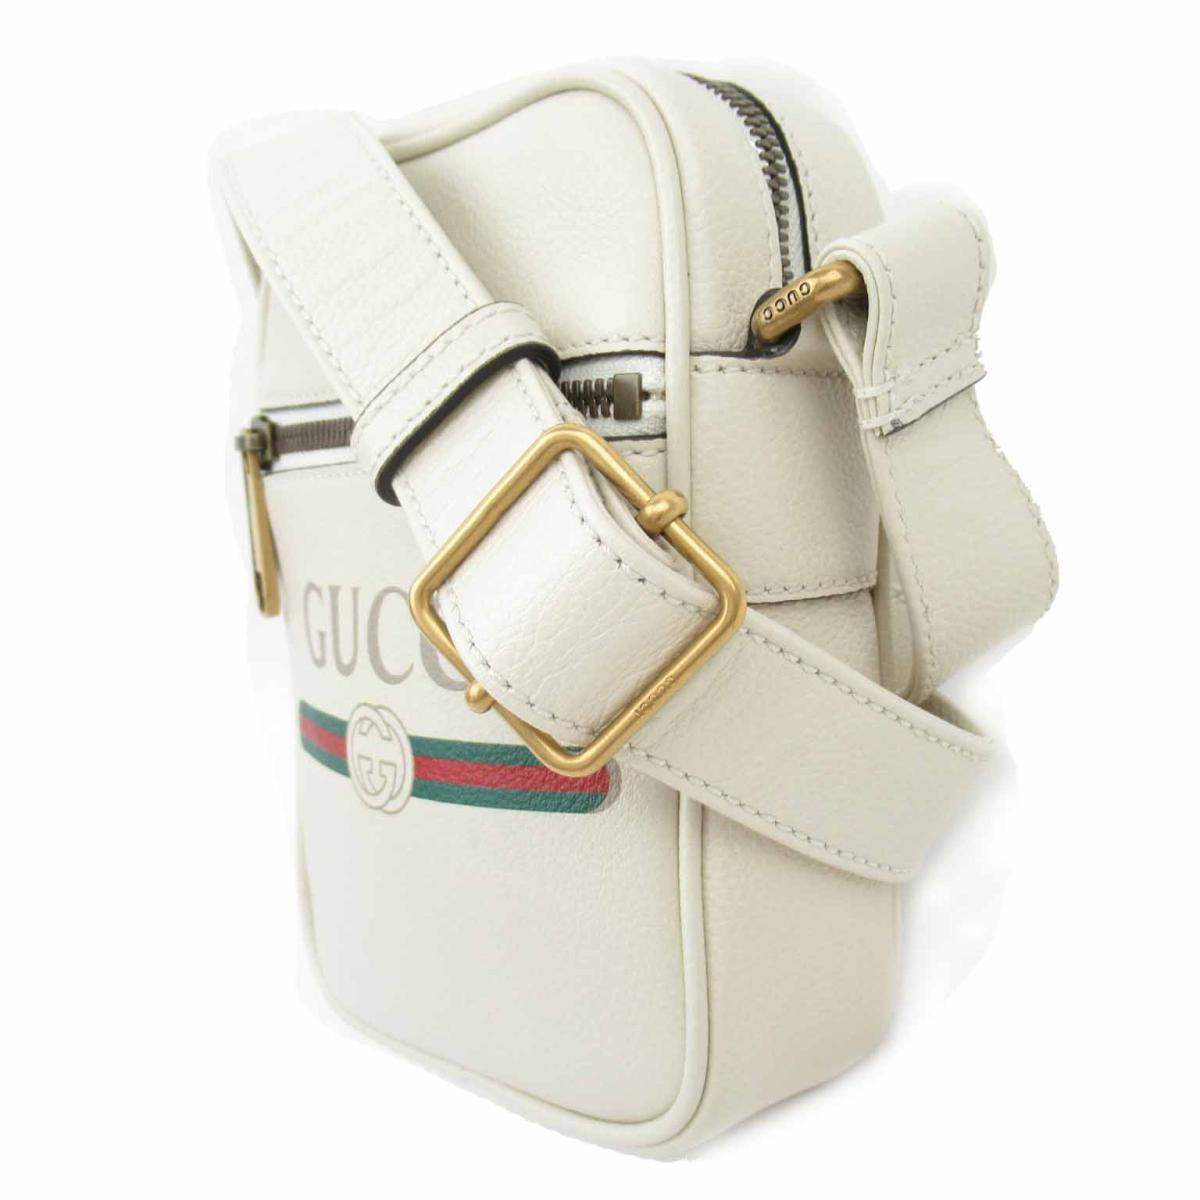 Gucci white GG embossed leather box crossbody – My Girlfriend's